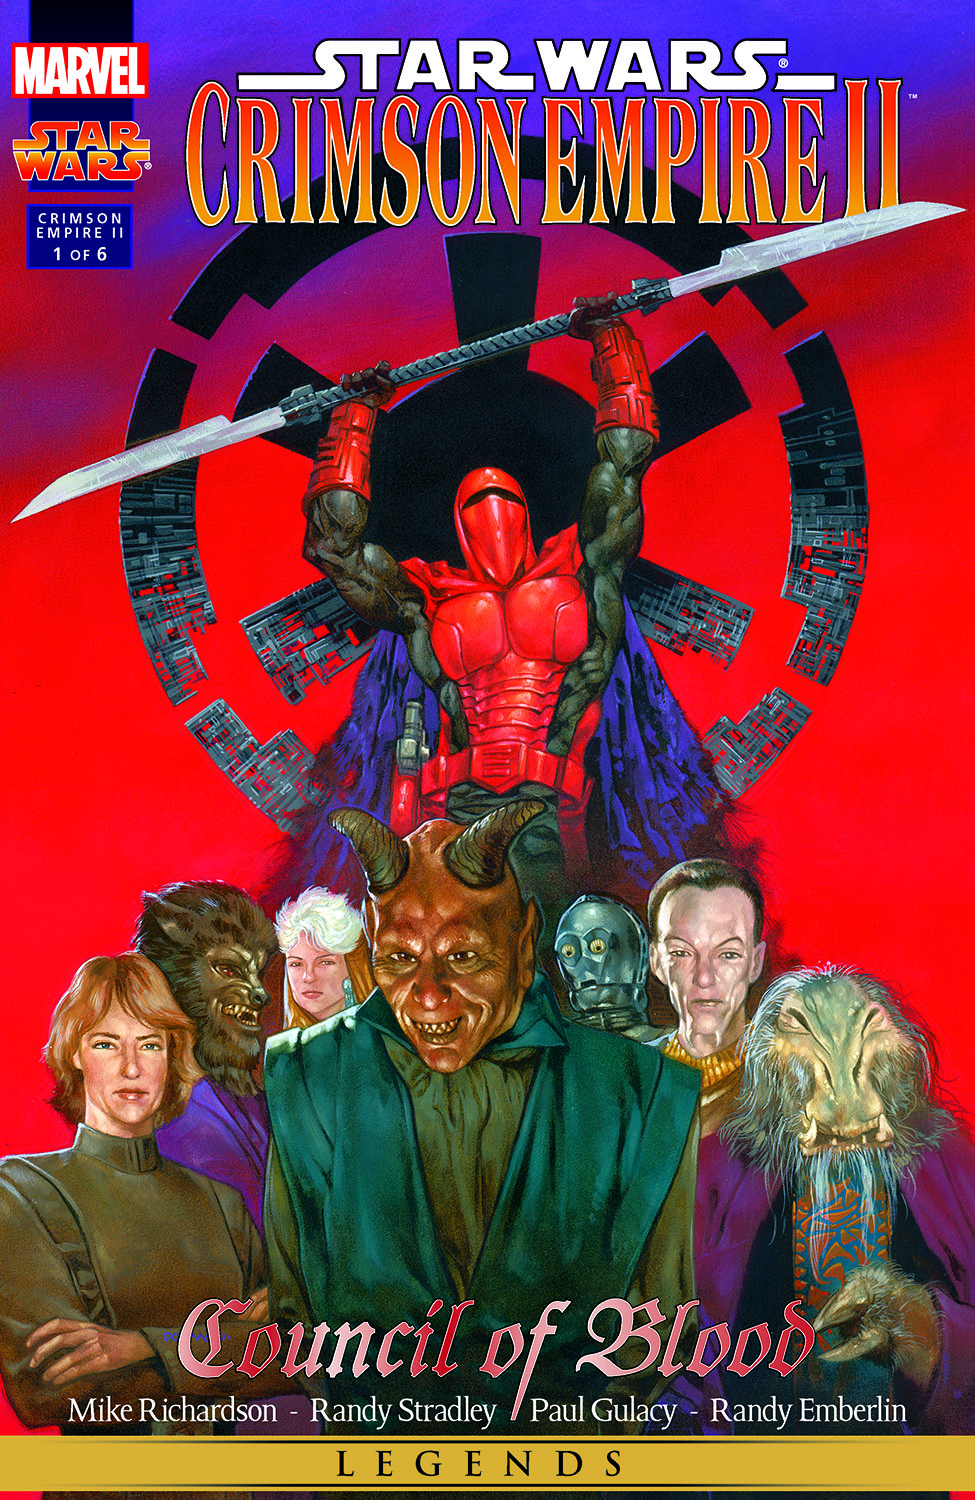 Star Wars: Crimson Empire II - Council of Blood (1998) #1